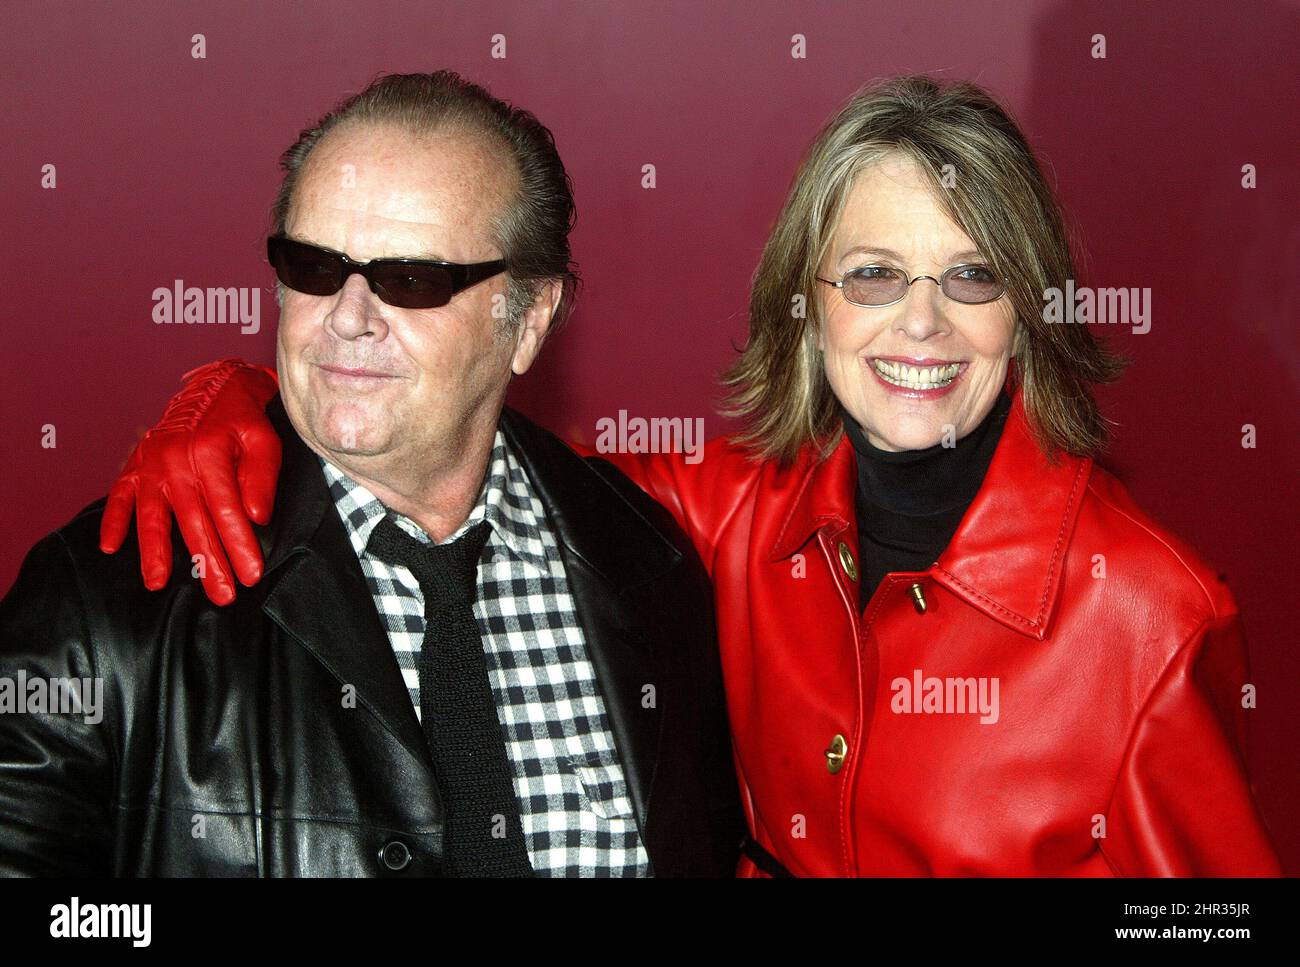 Jack Nicholson & Diane Keaton at the Berlin Film Festival 2004 promoting their film  Something's Gotta Give Stock Photo